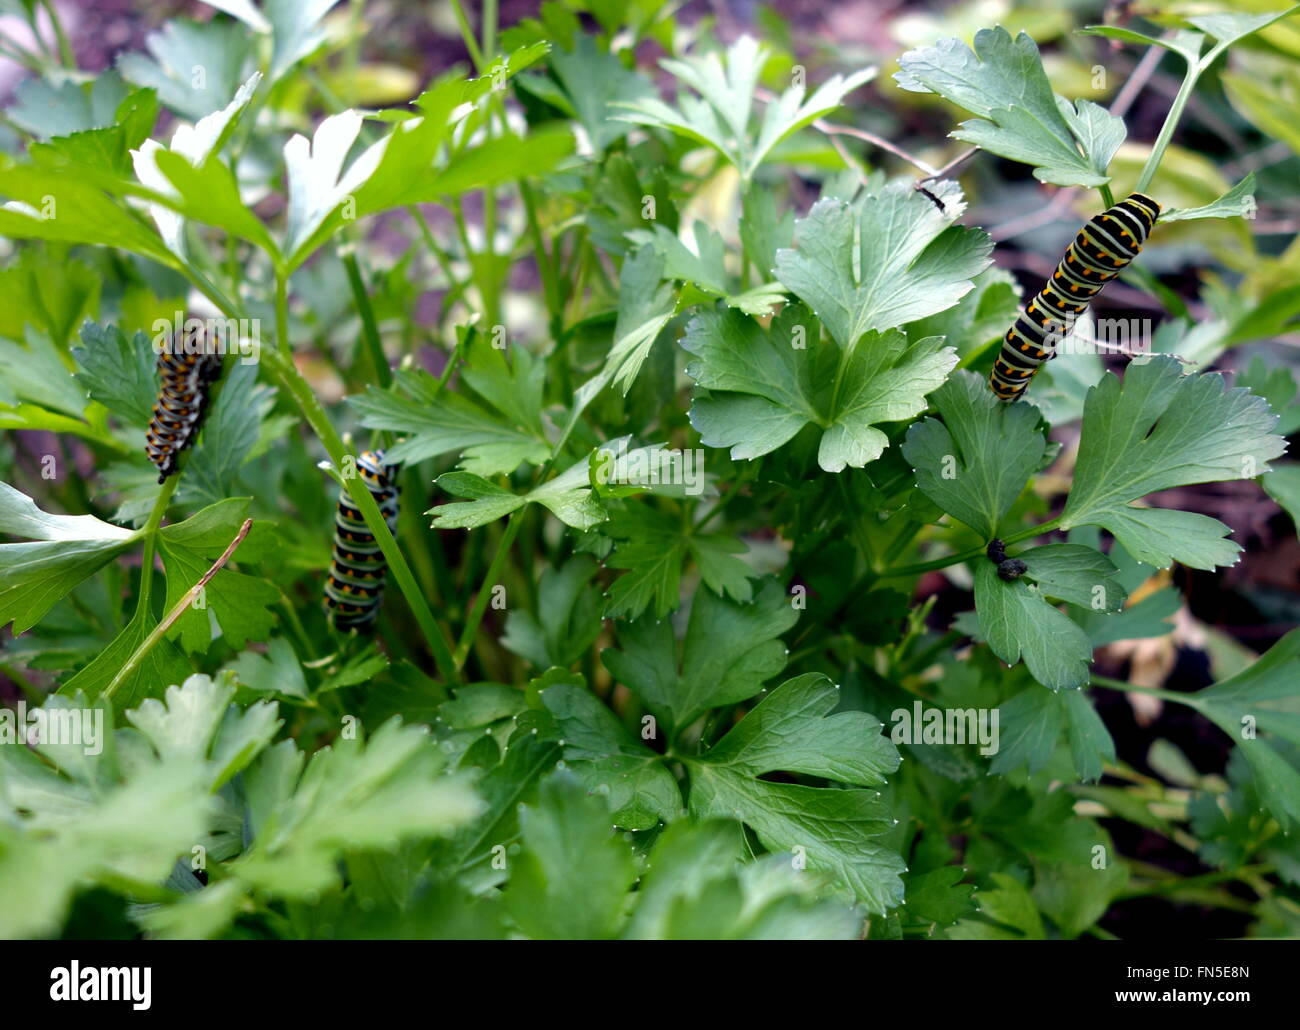 Caterpillars eating parsley Stock Photo